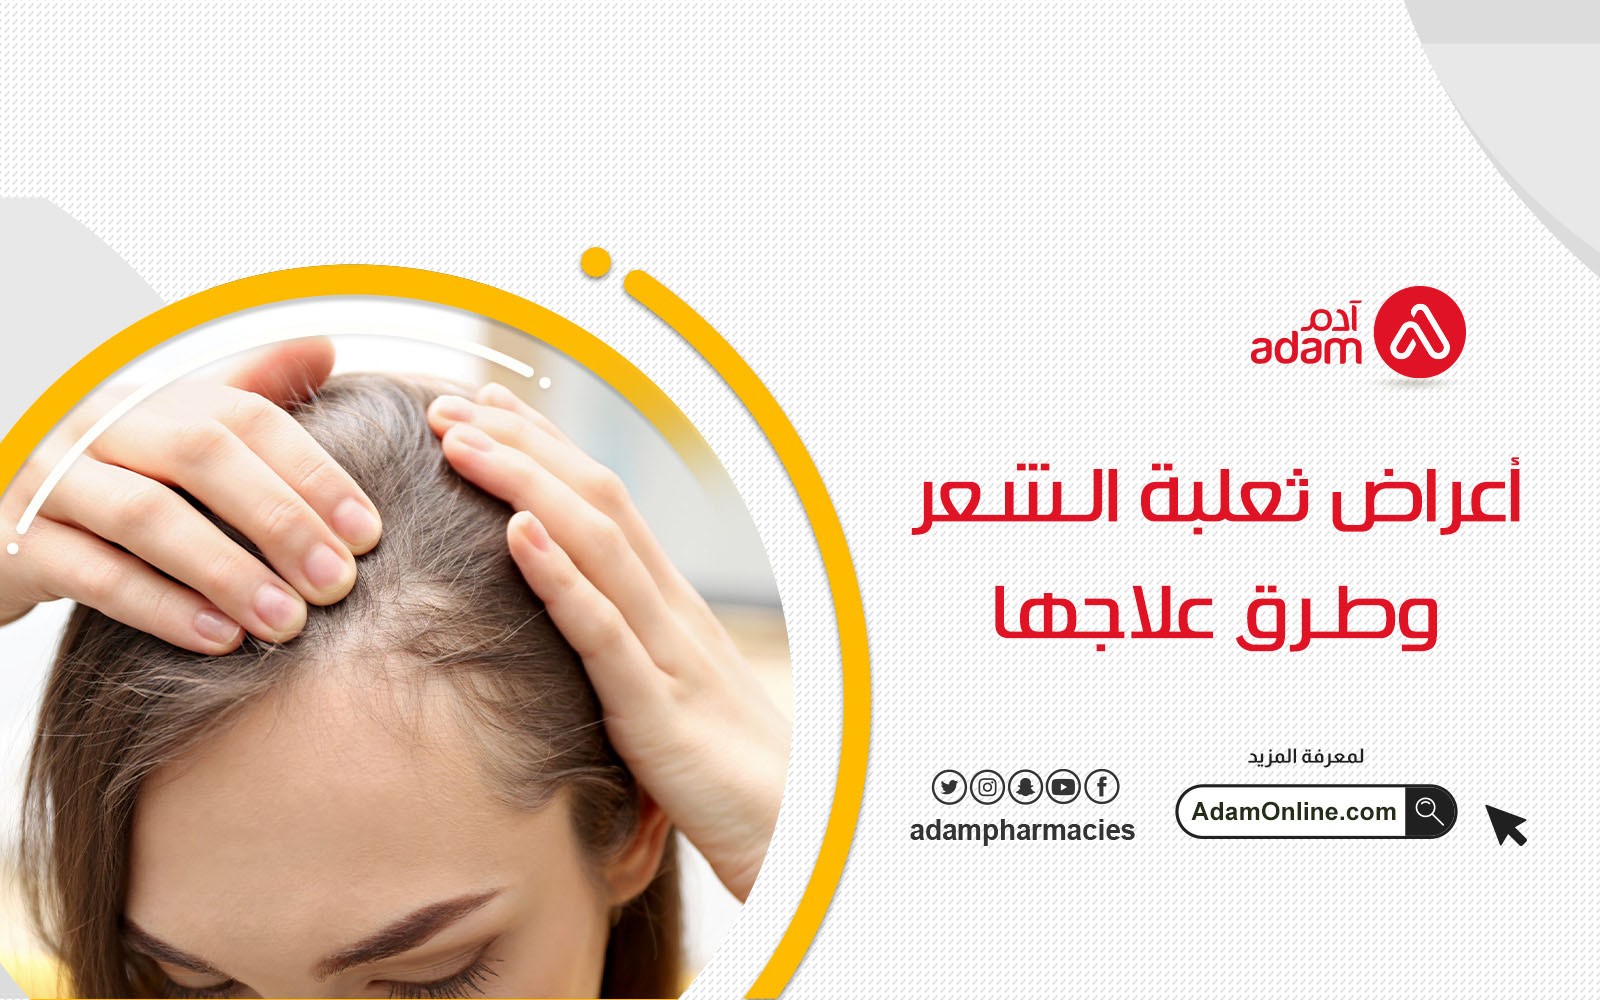 Alopecia hair symptoms and treatment methods